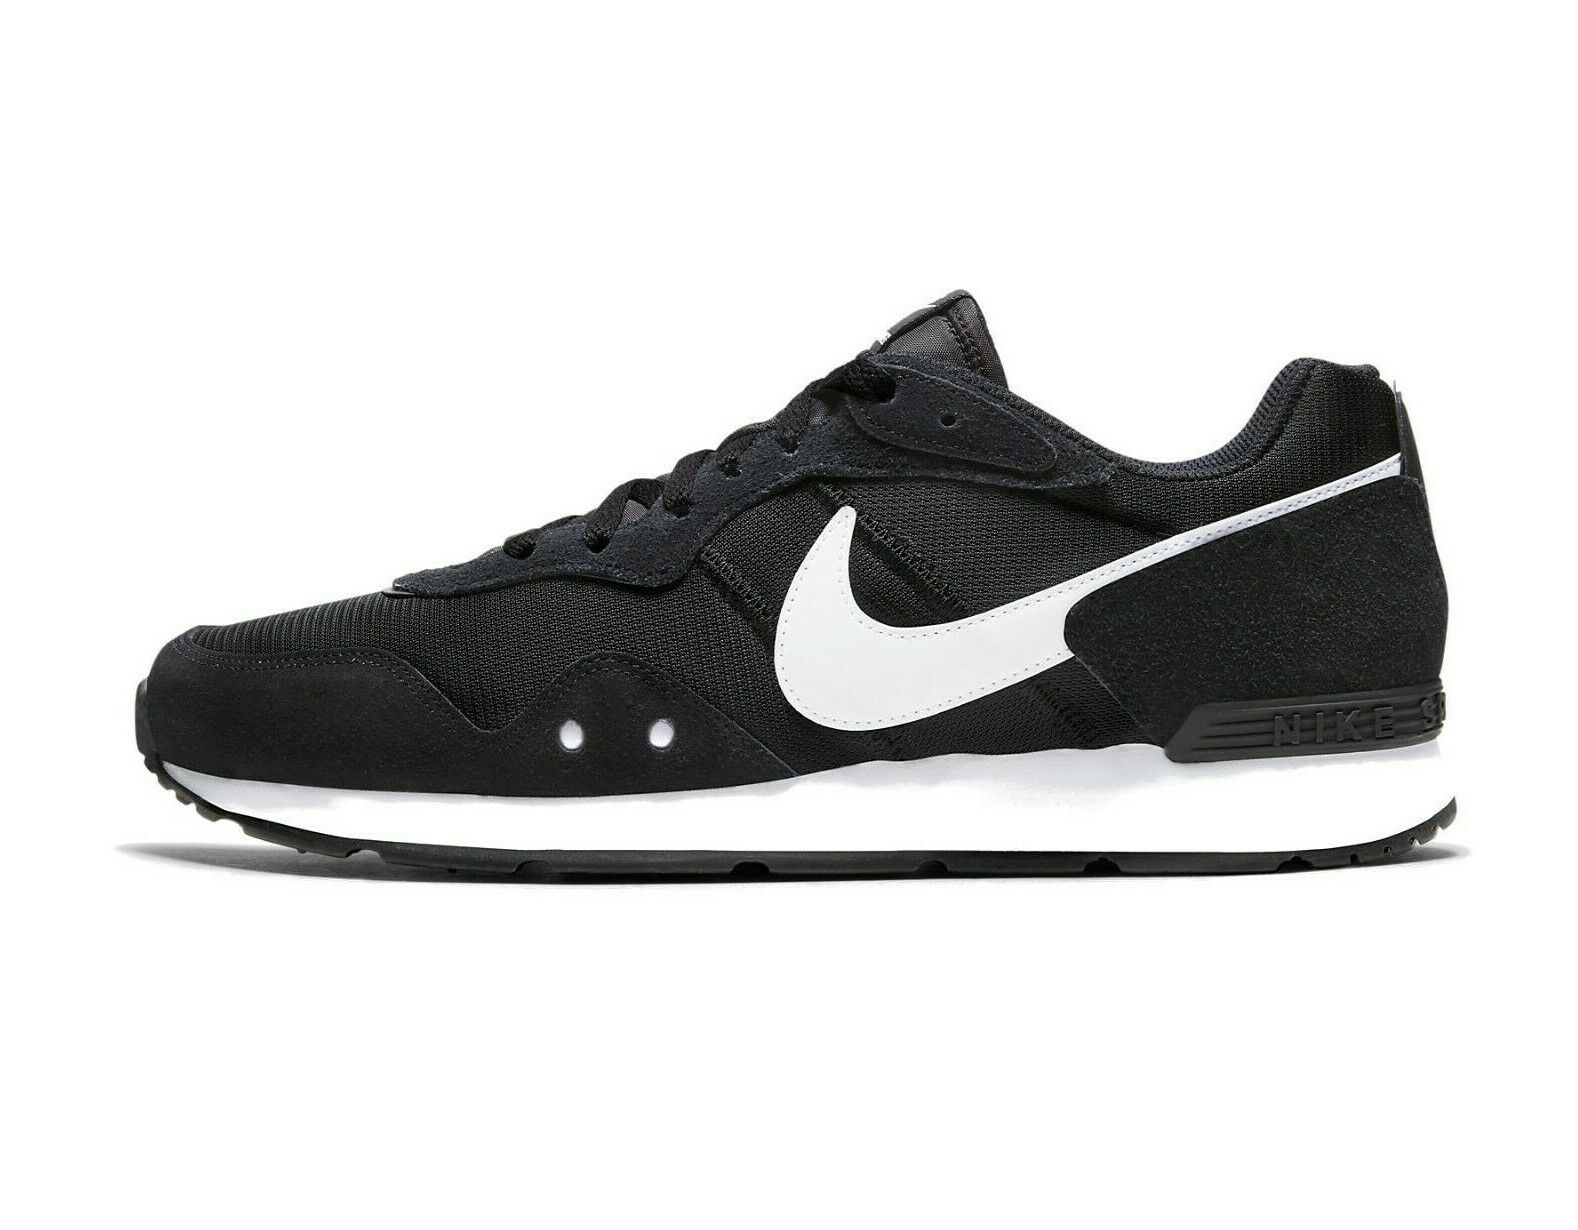 Nike Venture Runner Black Multi Size US Mens Athletic Running Shoes | eBay